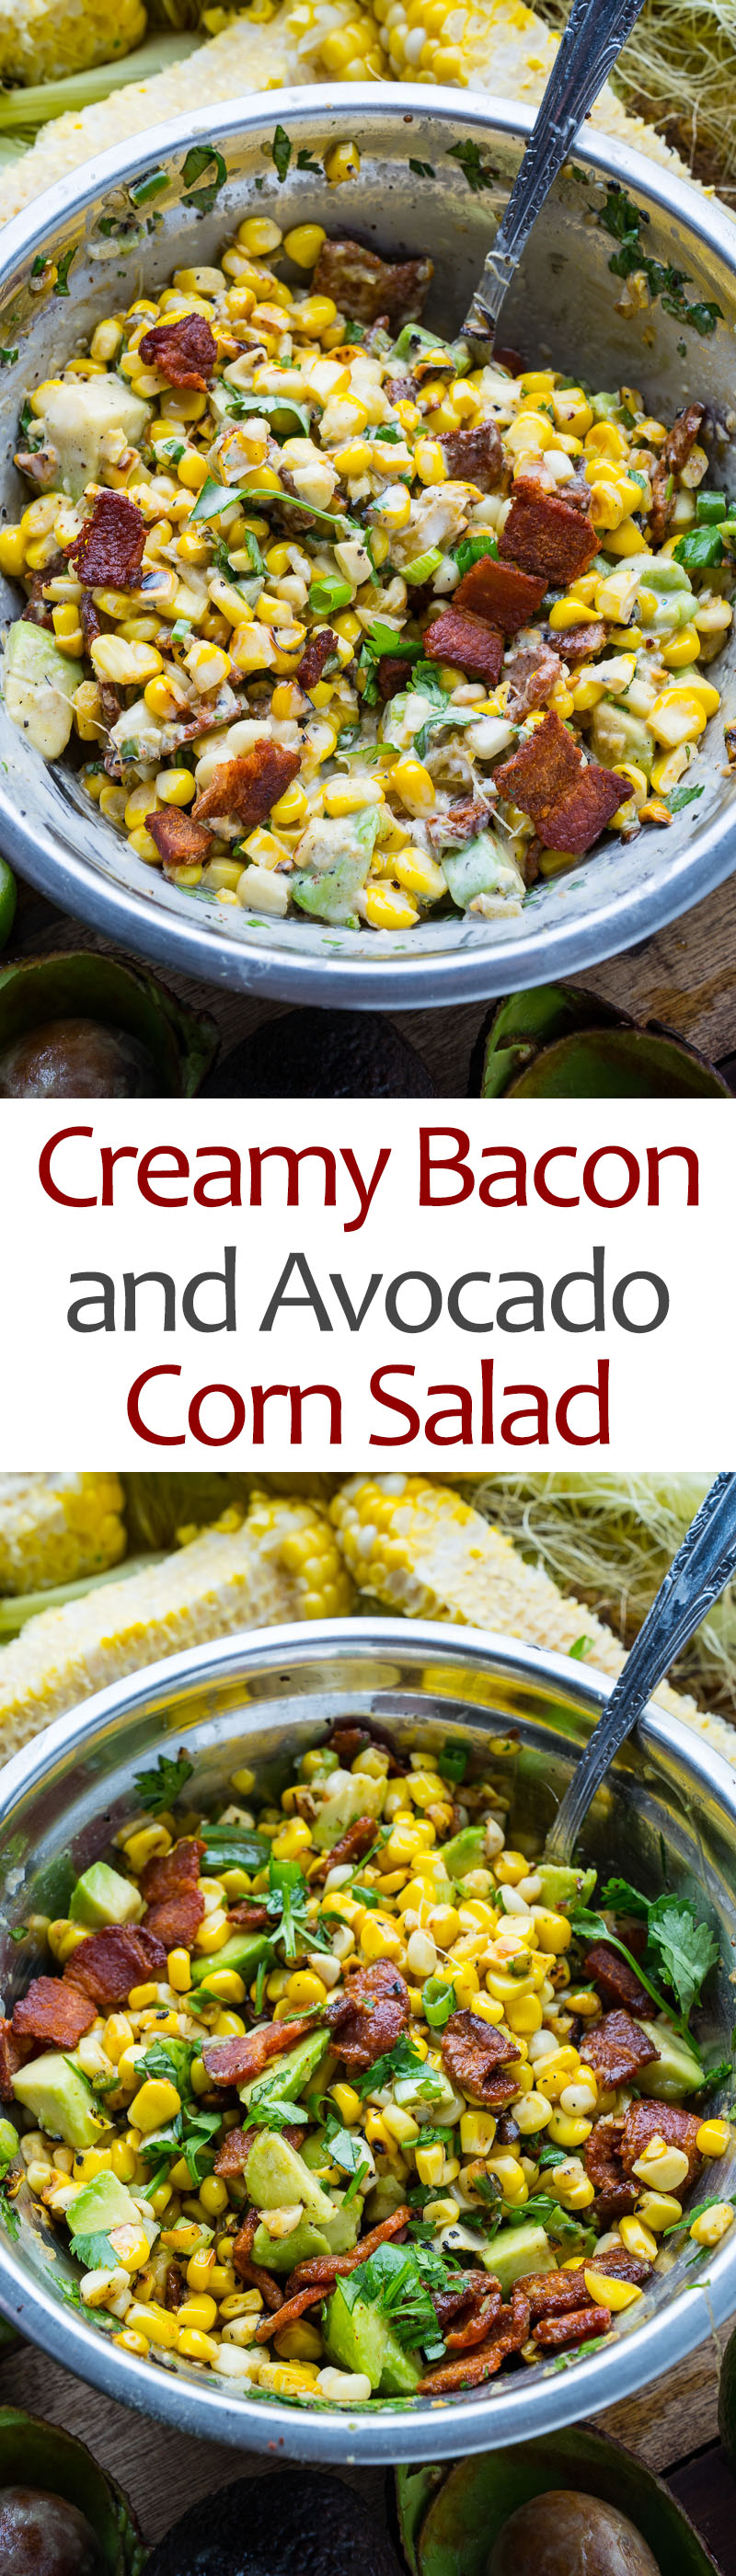 Creamy Bacon and Avocado Corn Salad